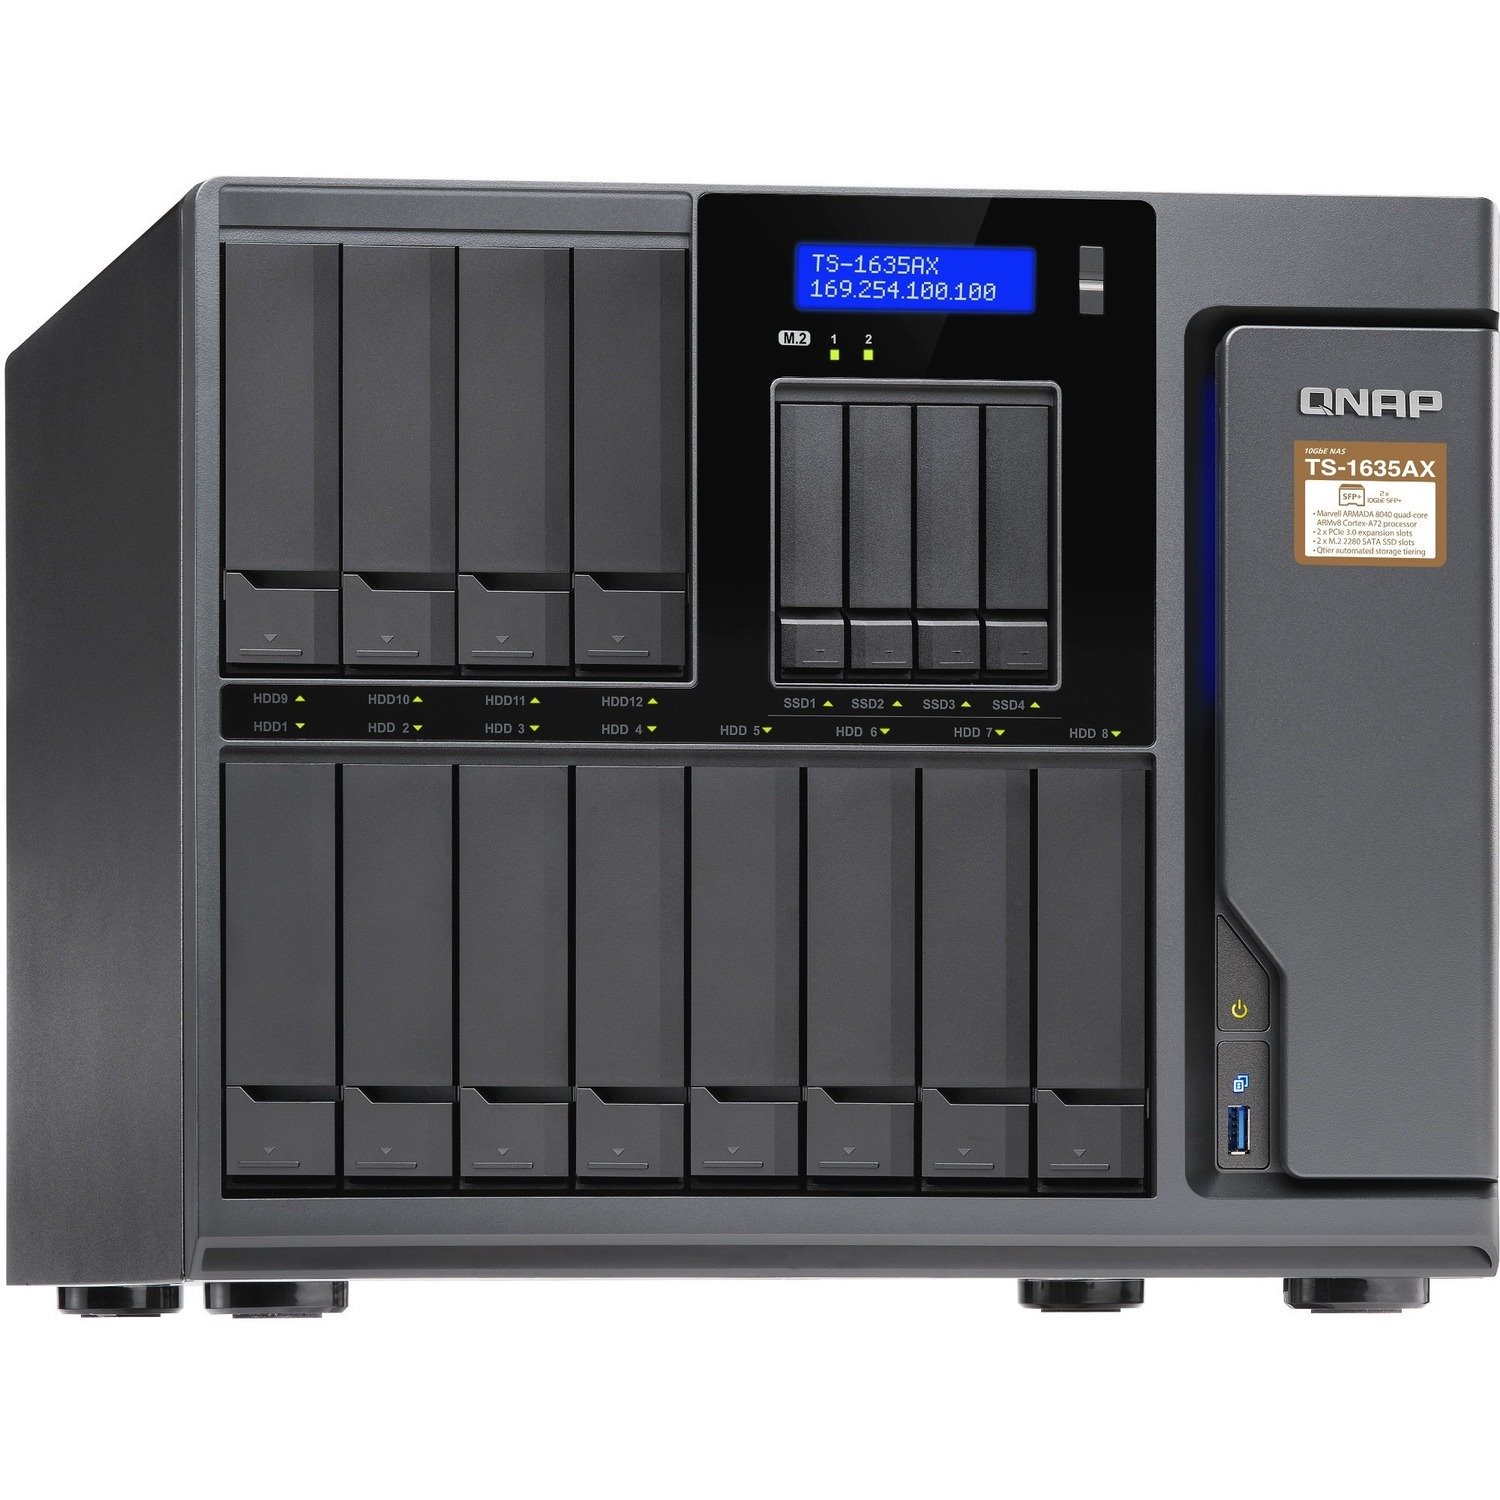 QNAP TS-1635AX-8G SAN/NAS Storage System